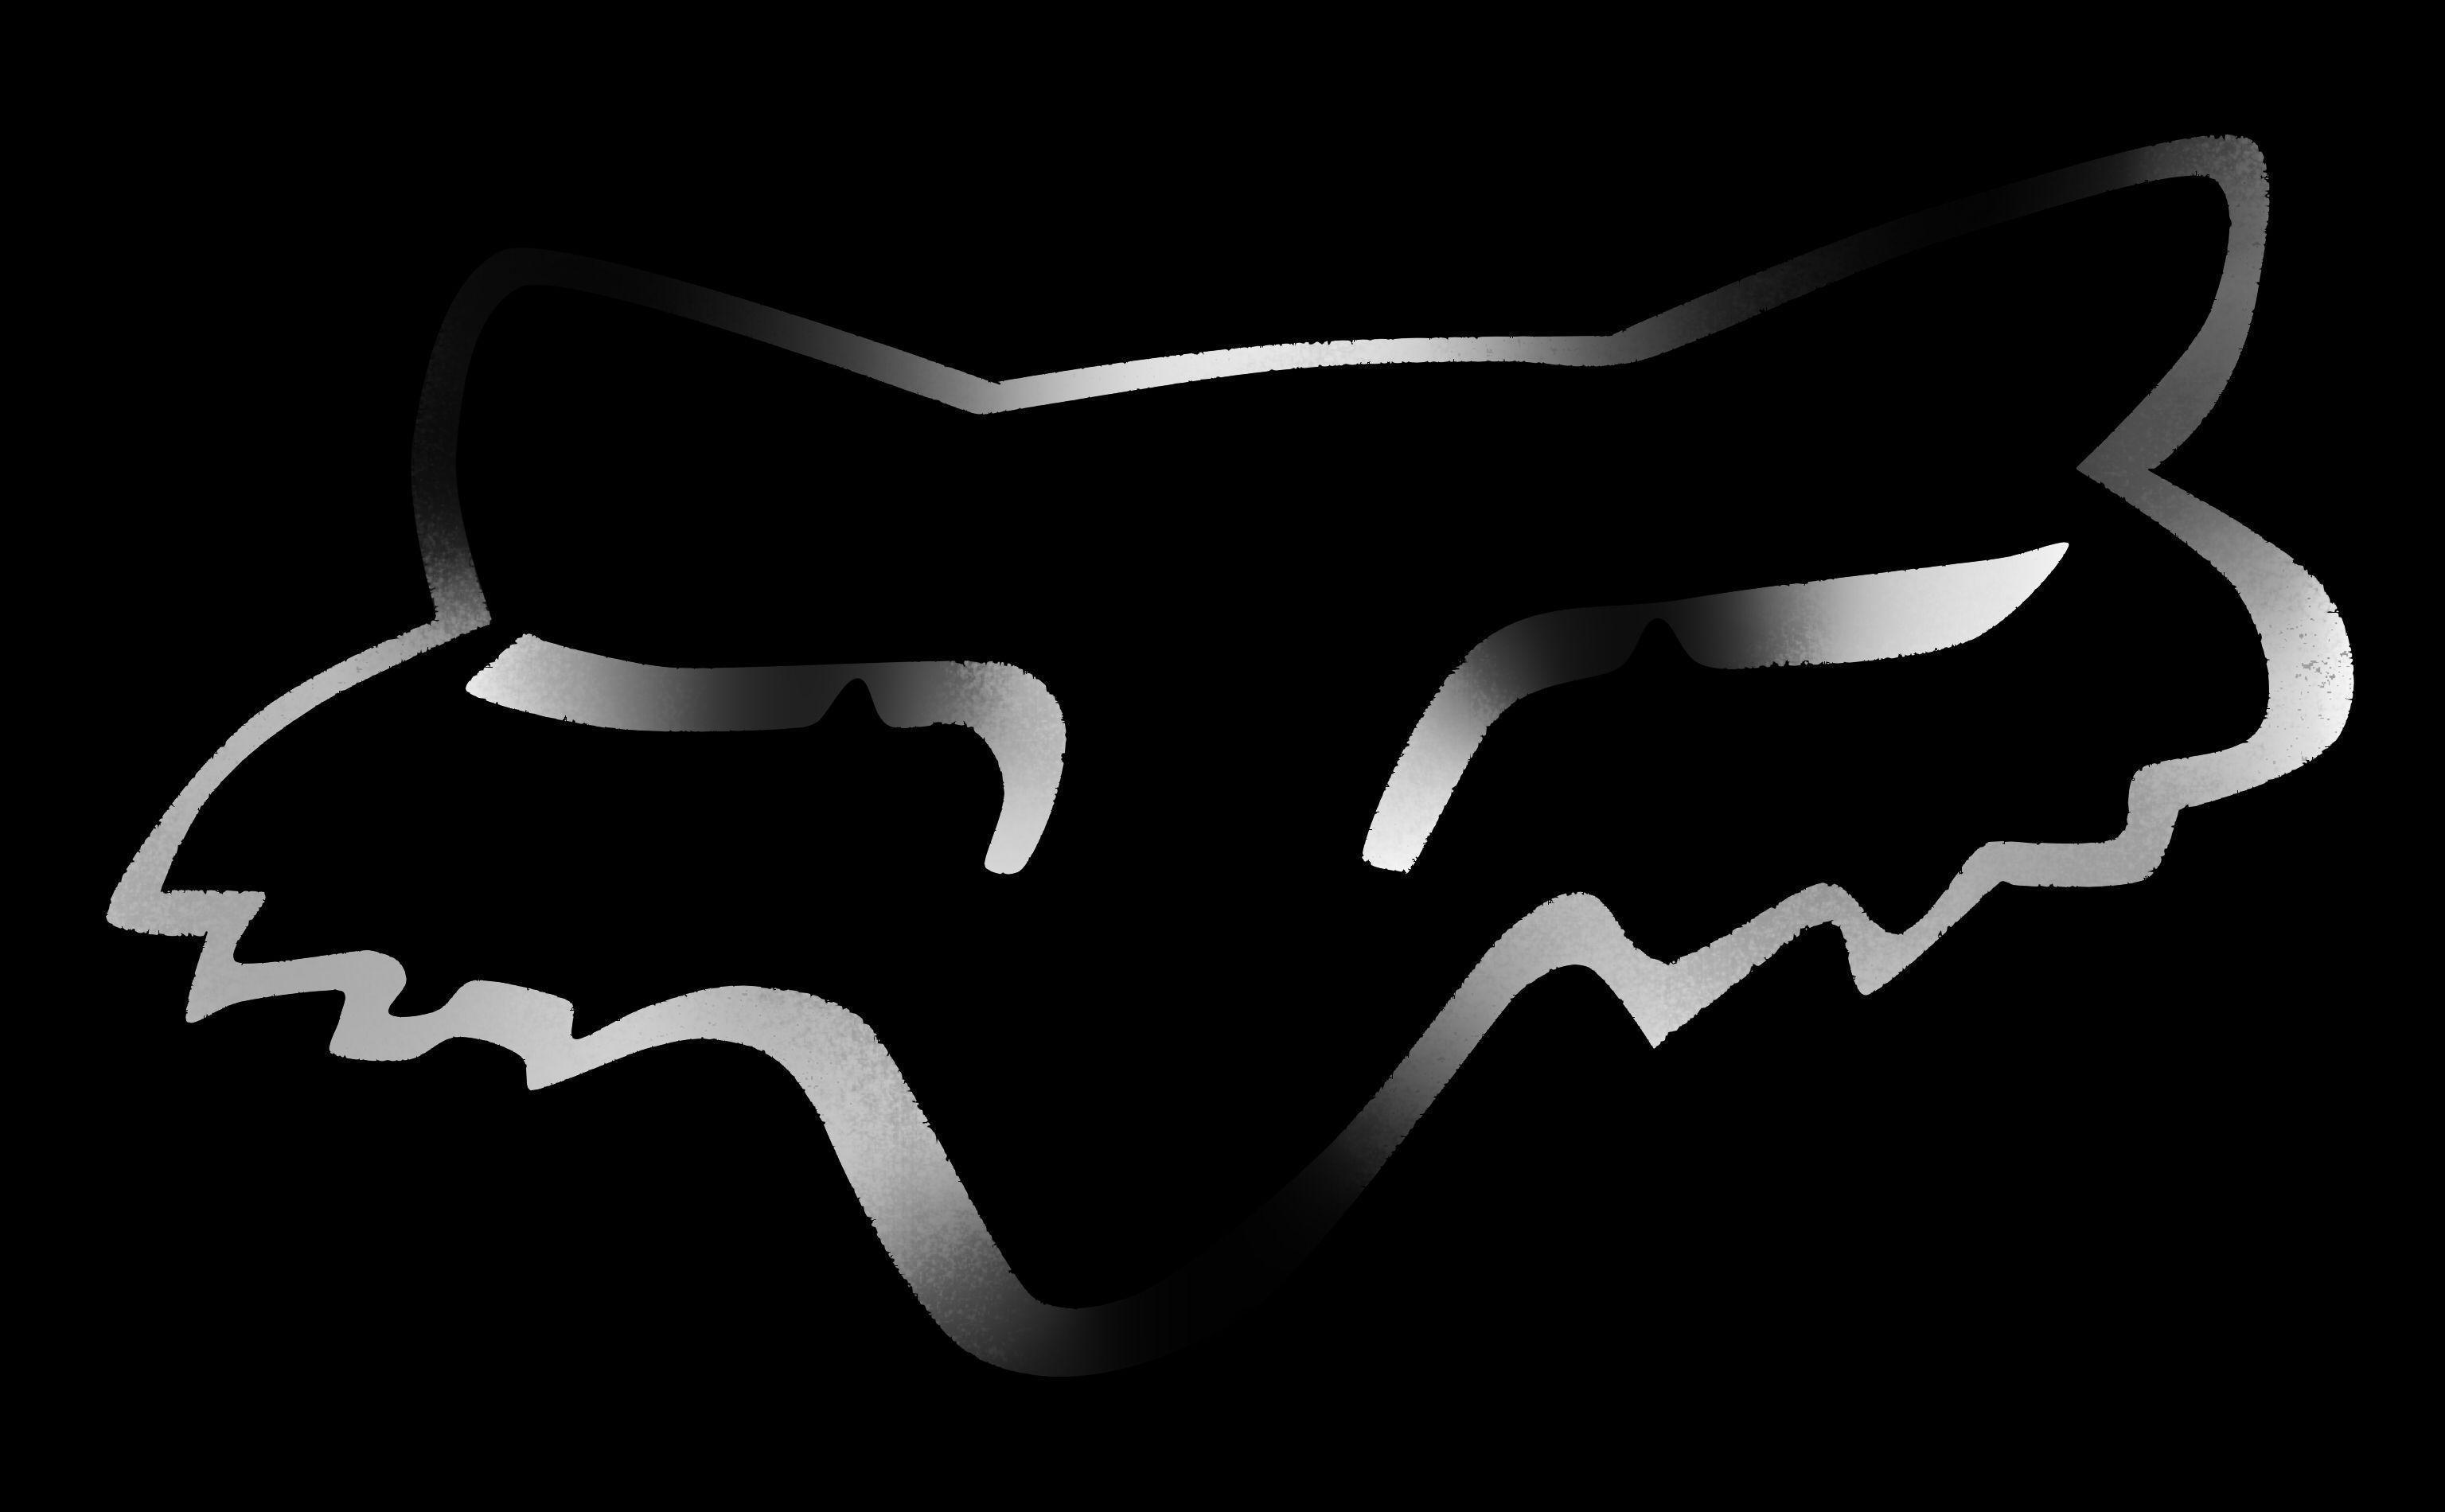 blue fox racing logo background